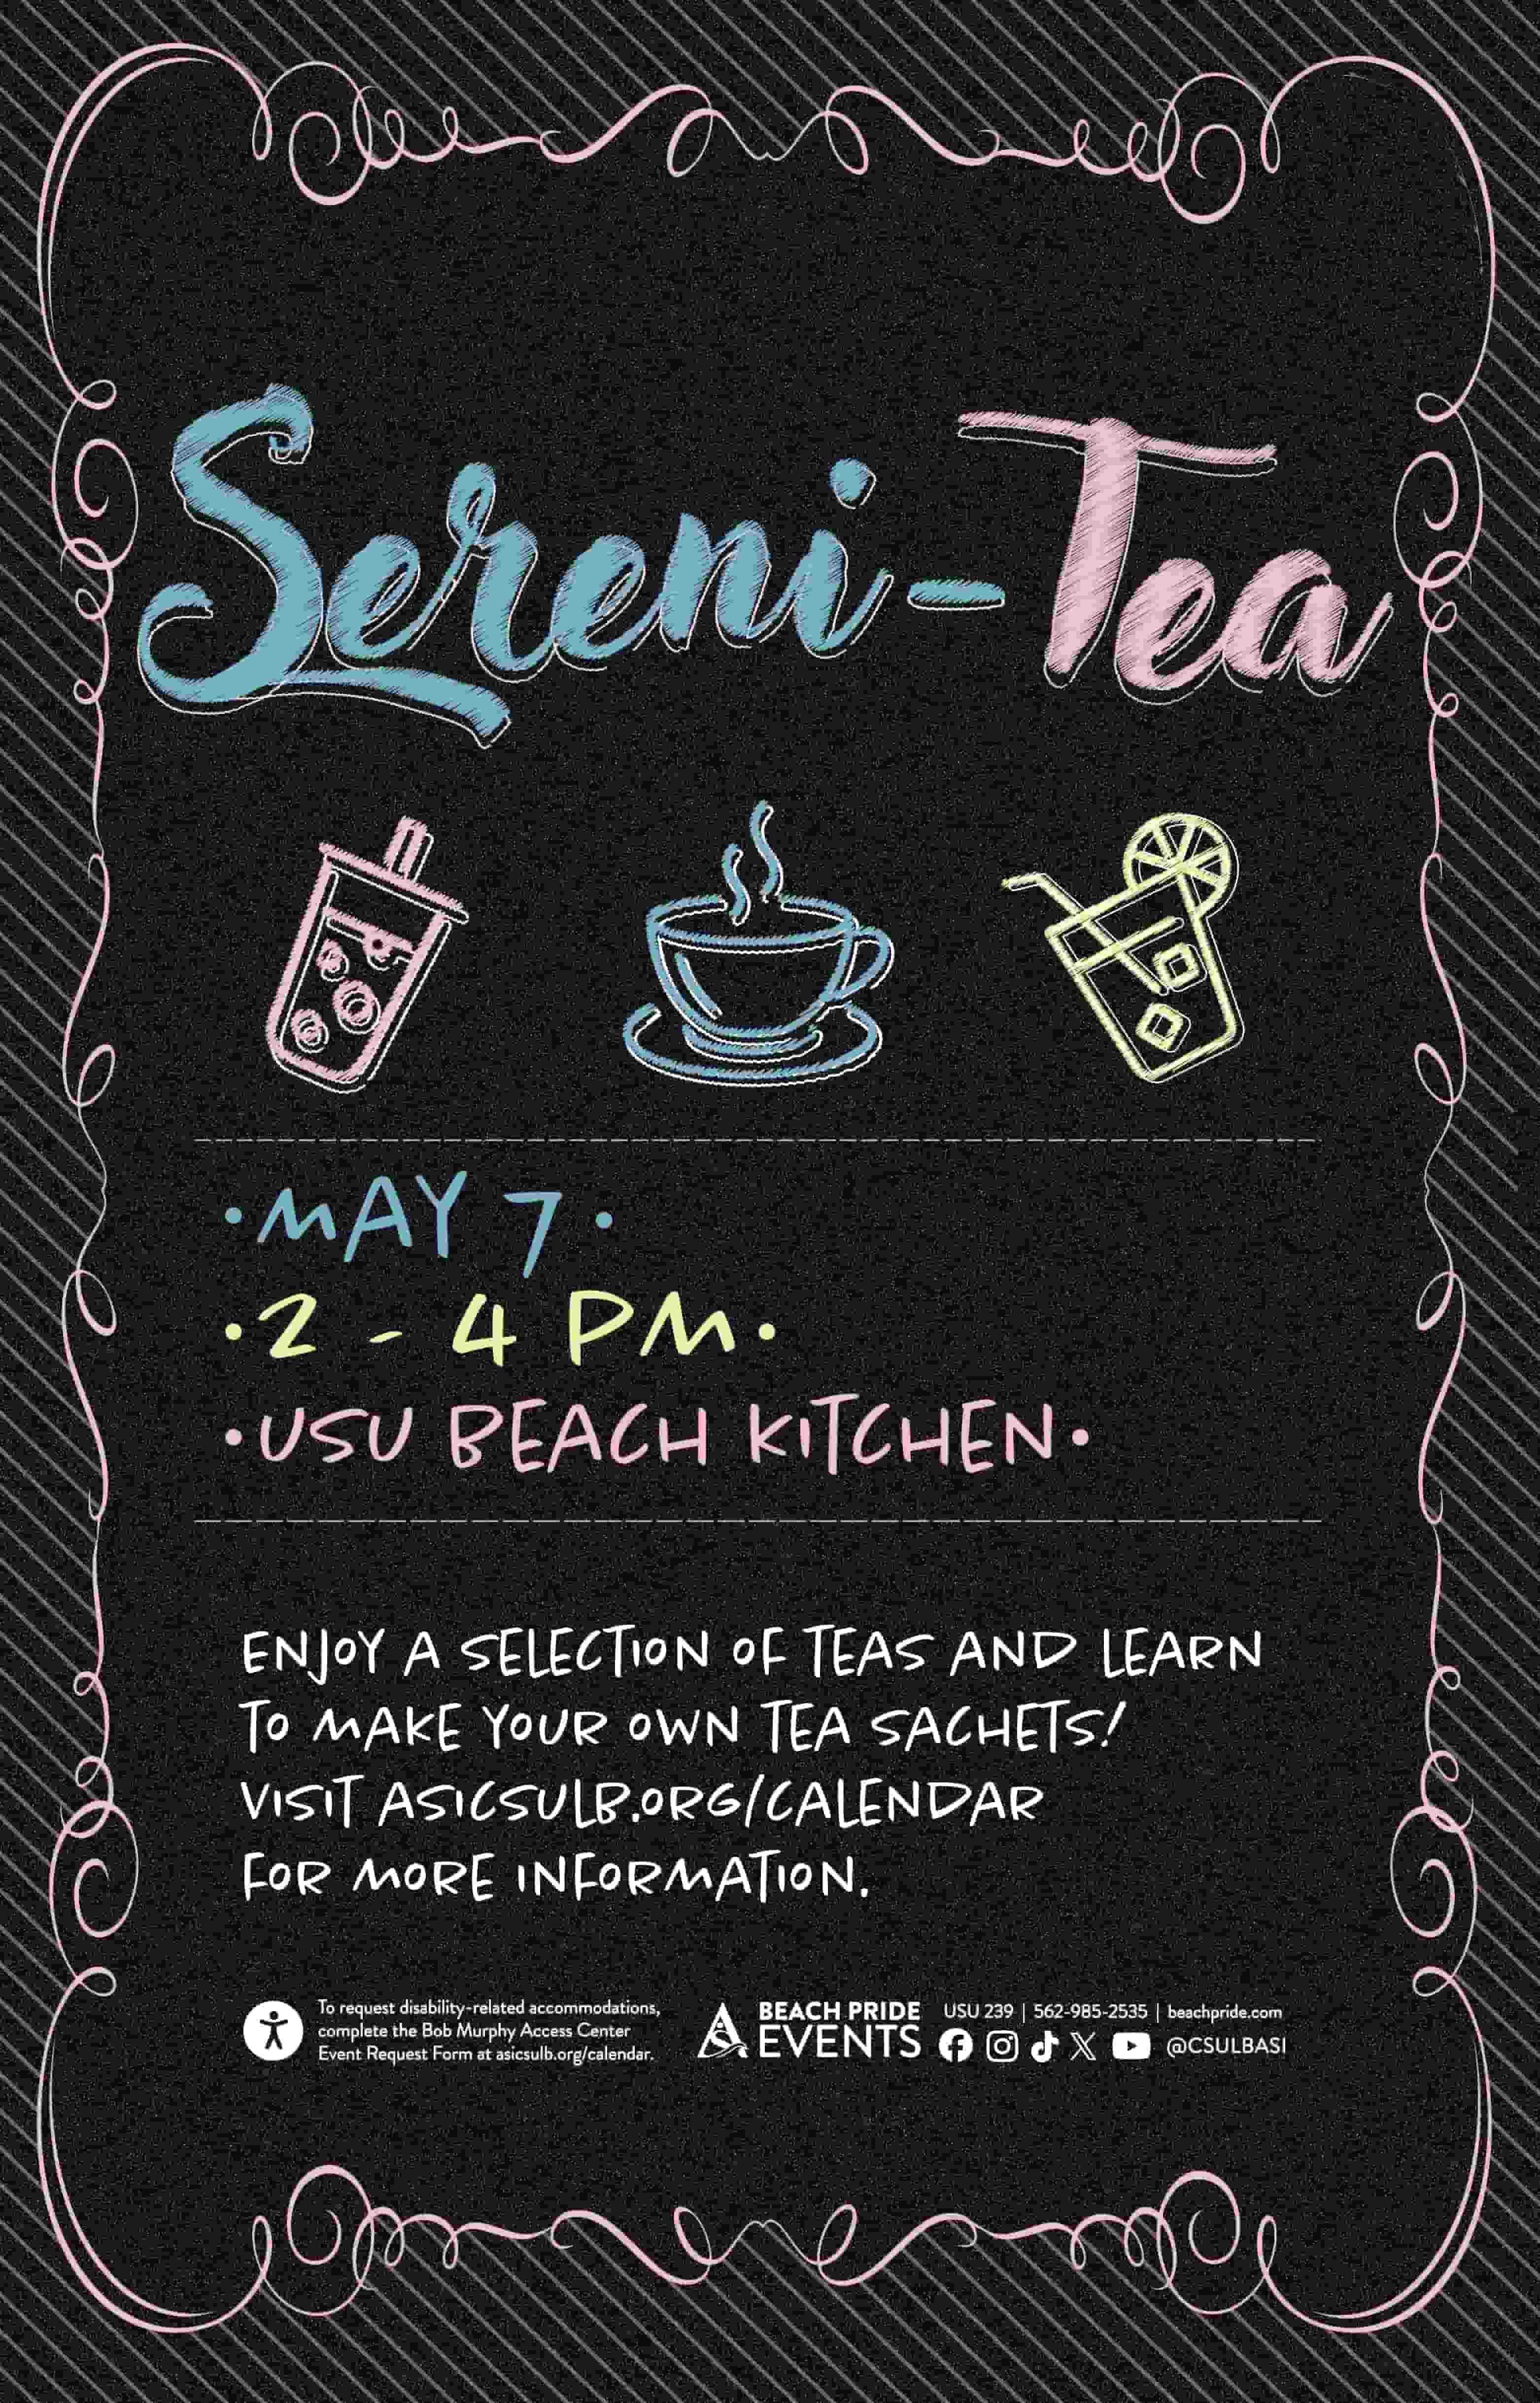 Sereni-TEA- May 7 - USU Beach Kitchen